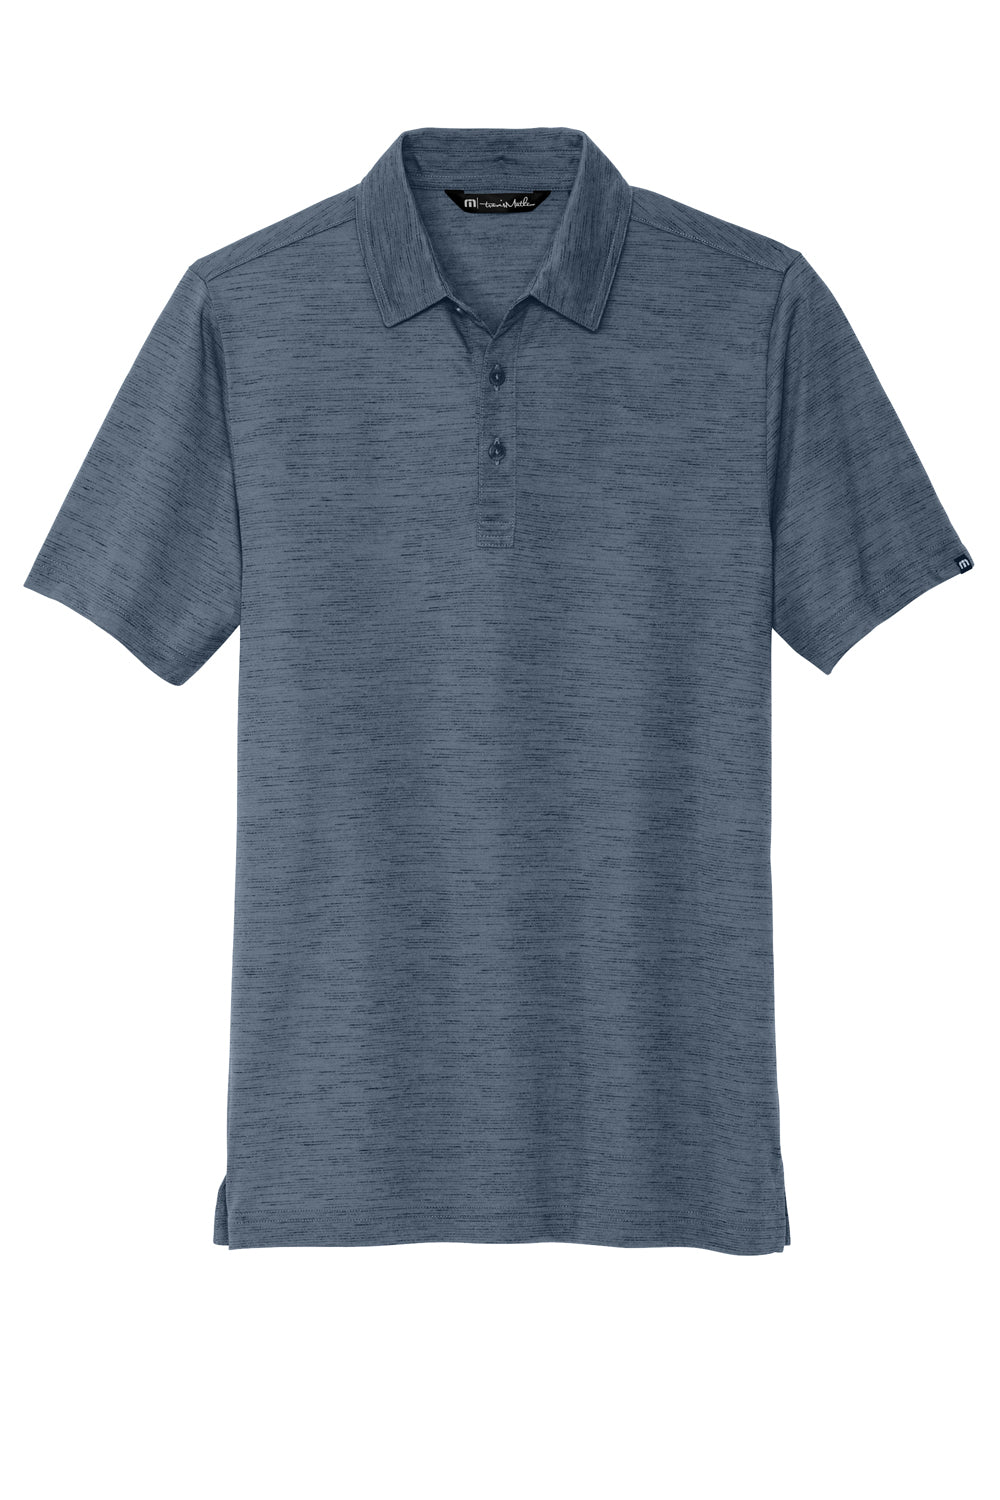 TravisMathew TM1MW451 Mens Auckland Slub Wrinkle Resistant Short Sleeve Polo Shirt Blue Nights Flat Front